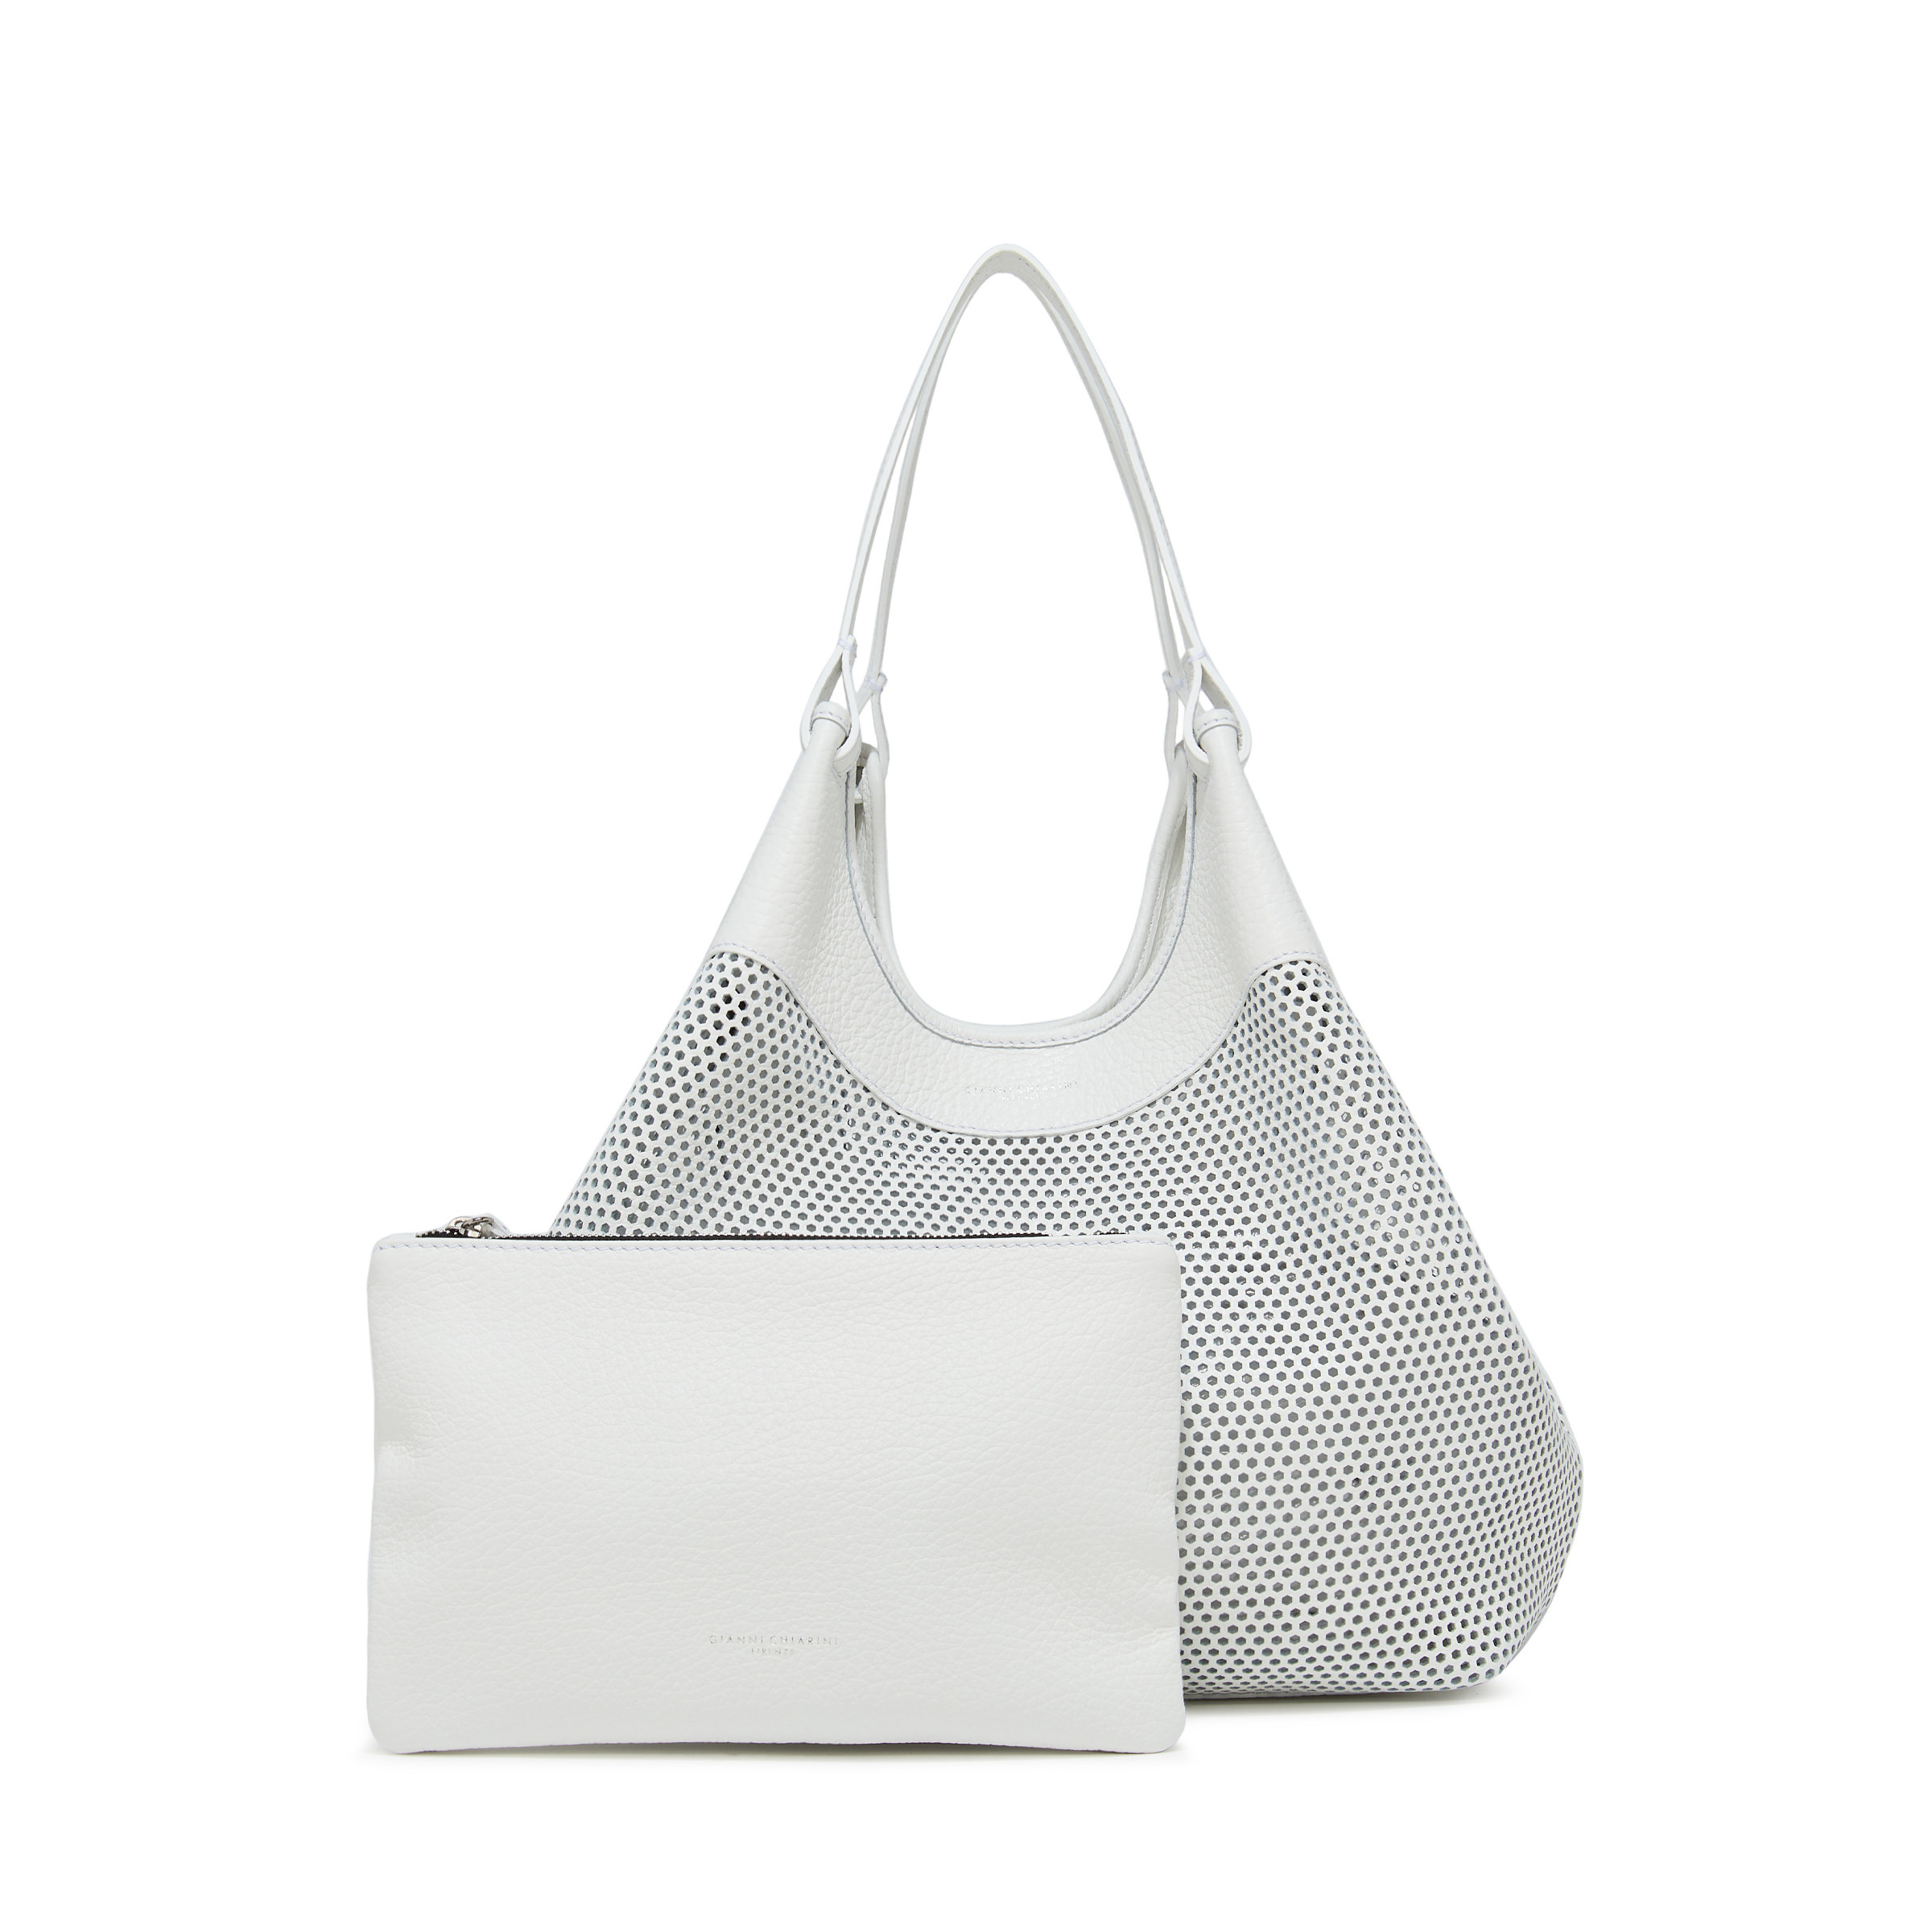 Gianni Chiarini - Dua bag in leather, White, large image number 2